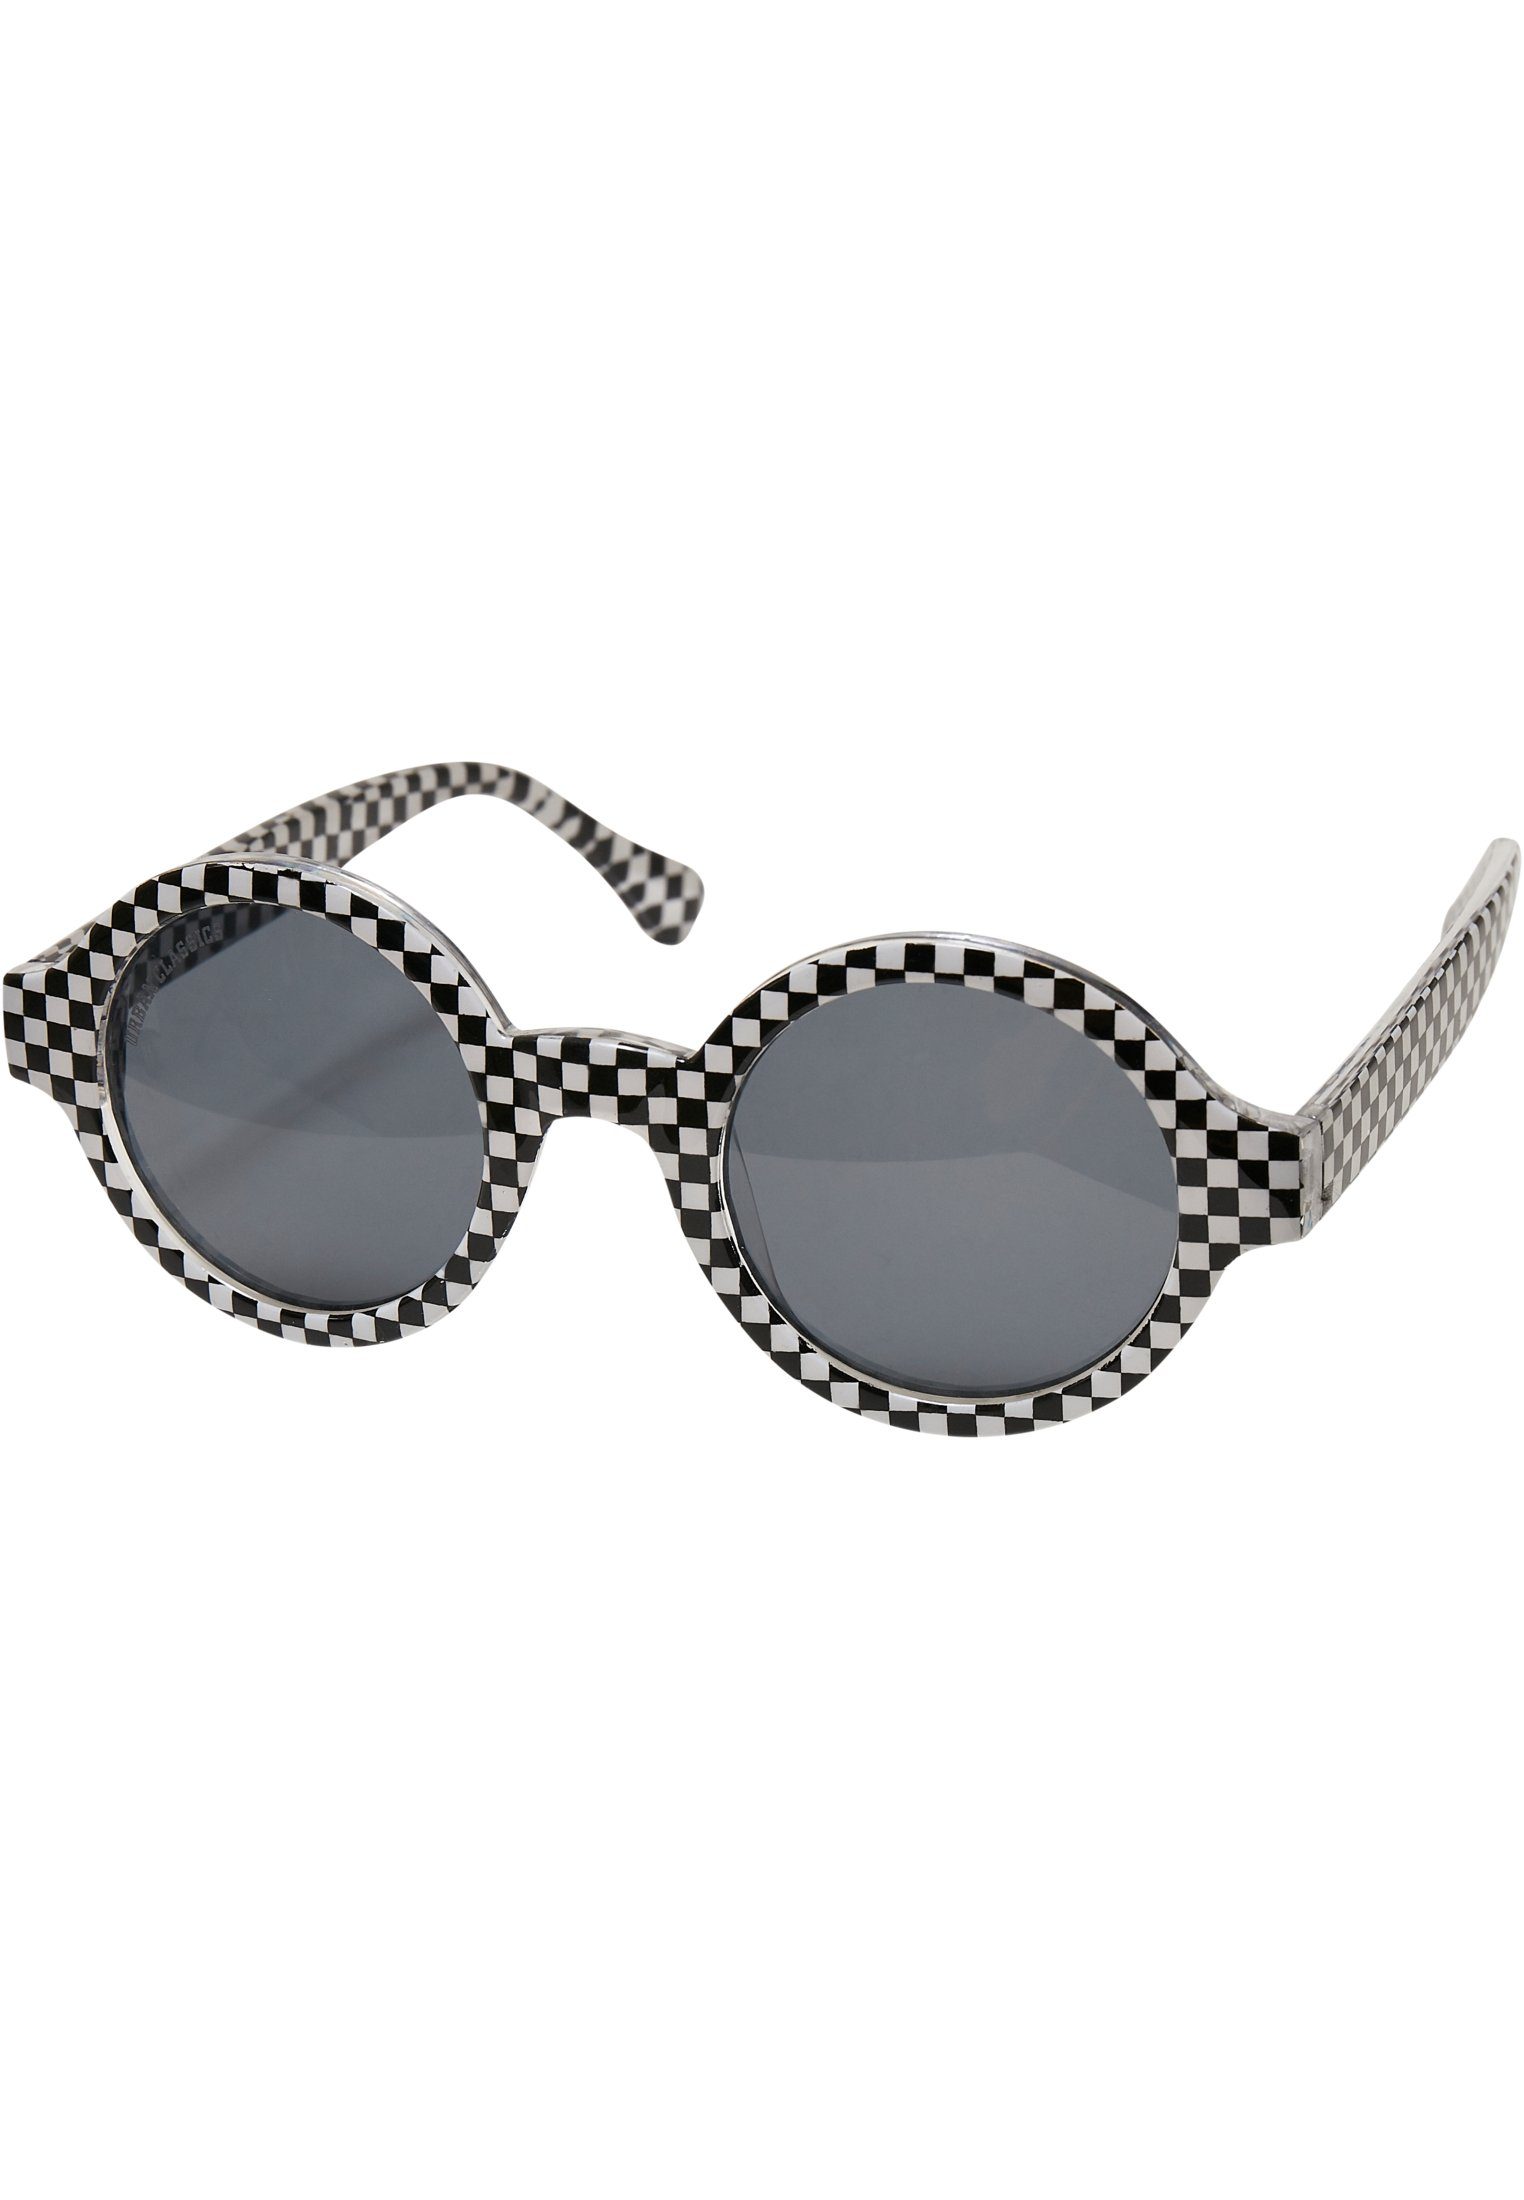 black/white Sunglasses Funk URBAN UC Sonnenbrille Accessoires CLASSICS Retro